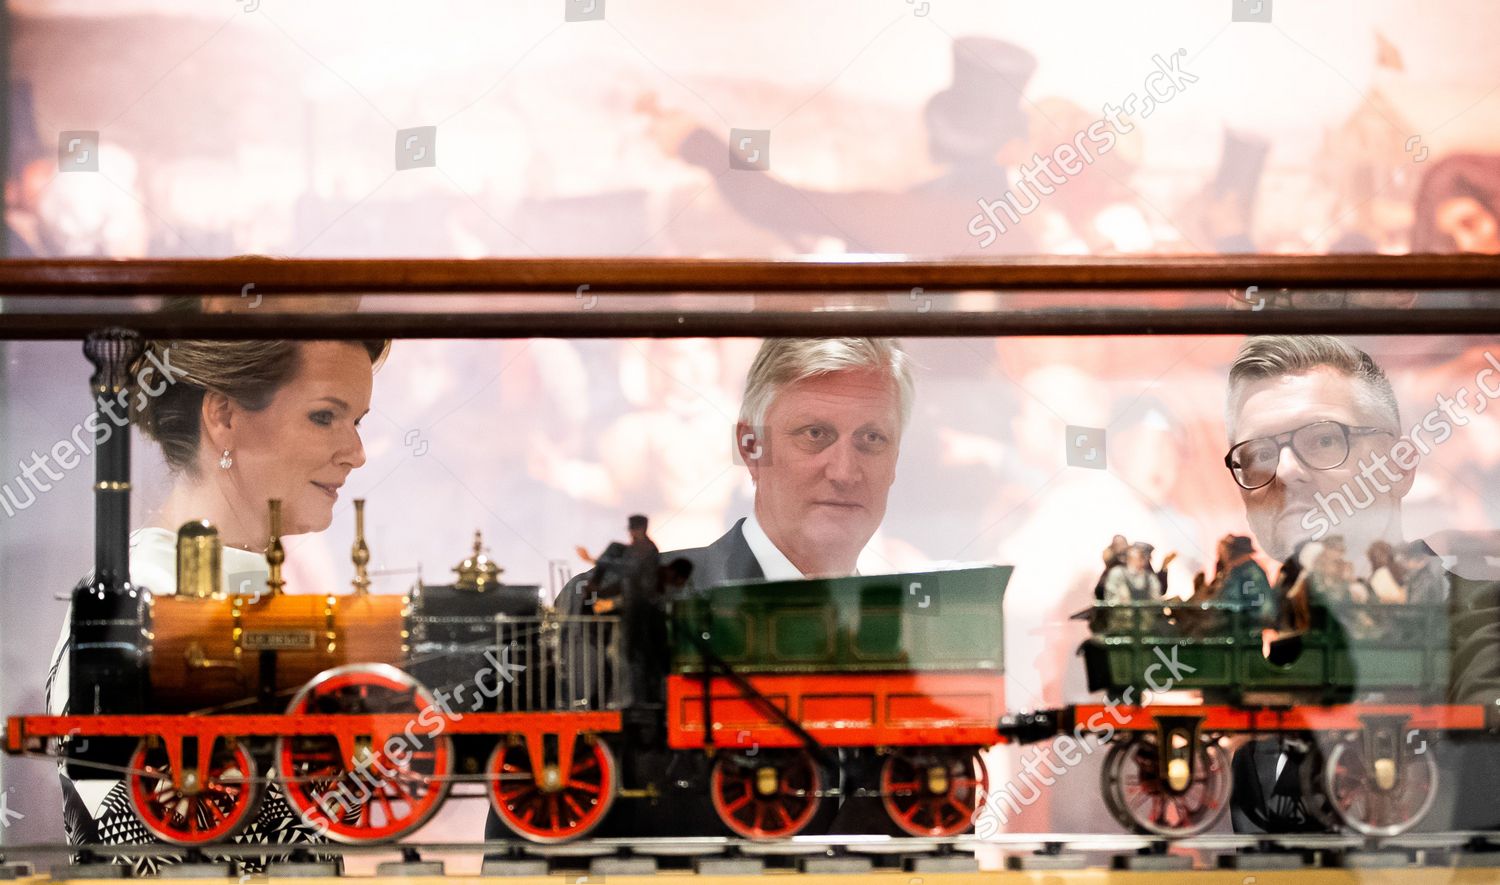 royals-europalia-trains-and-tracks-biennale-brussels-belgium-shutterstock-editorial-12537700b.jpg